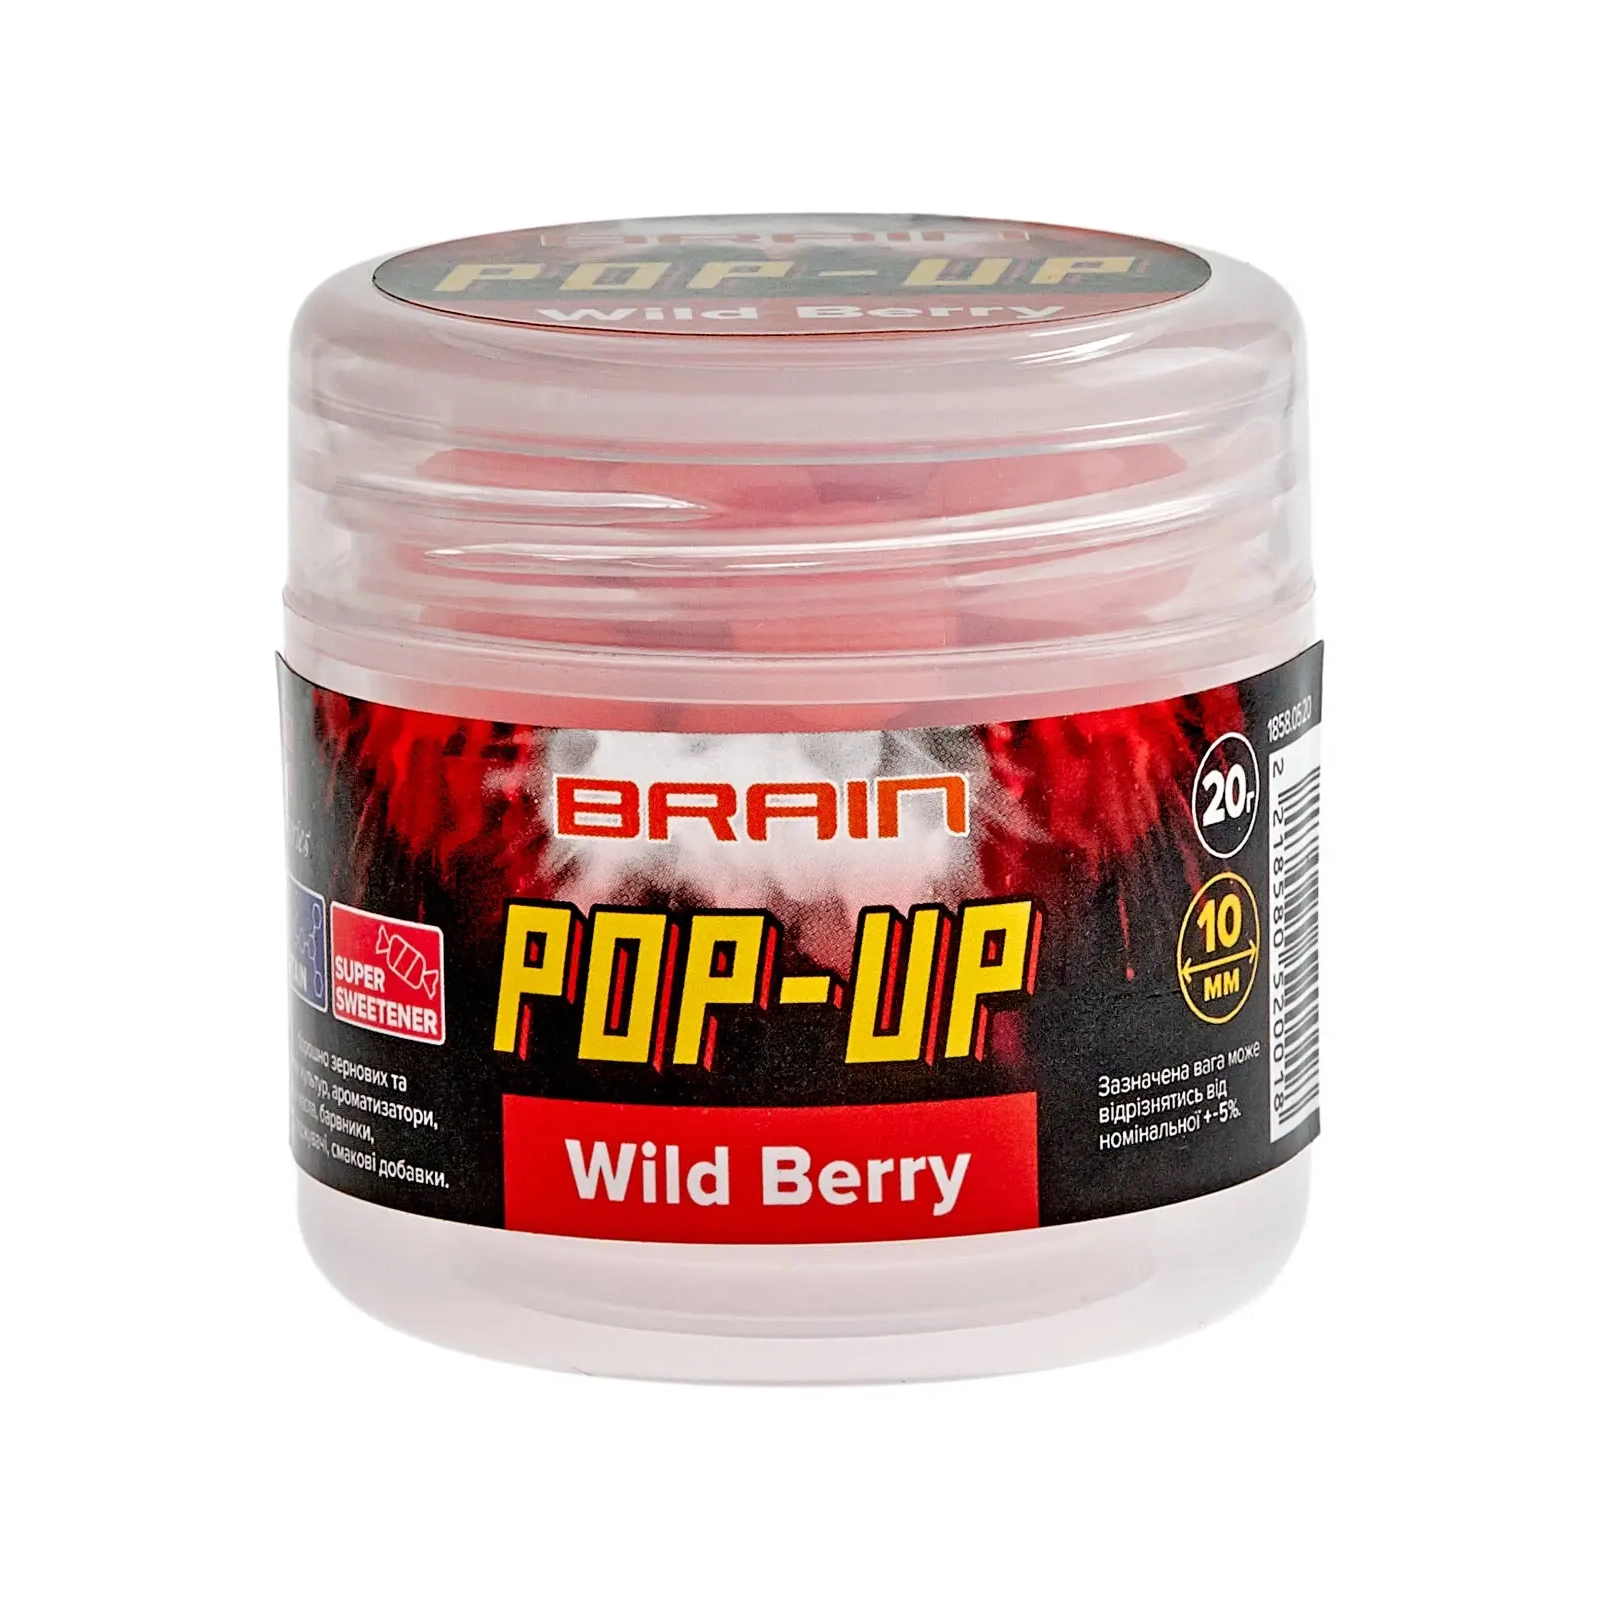 Бойл Brain fishing Pop-Up F1 Wild Berry (суниця) 10mm 20g (200.58.45)